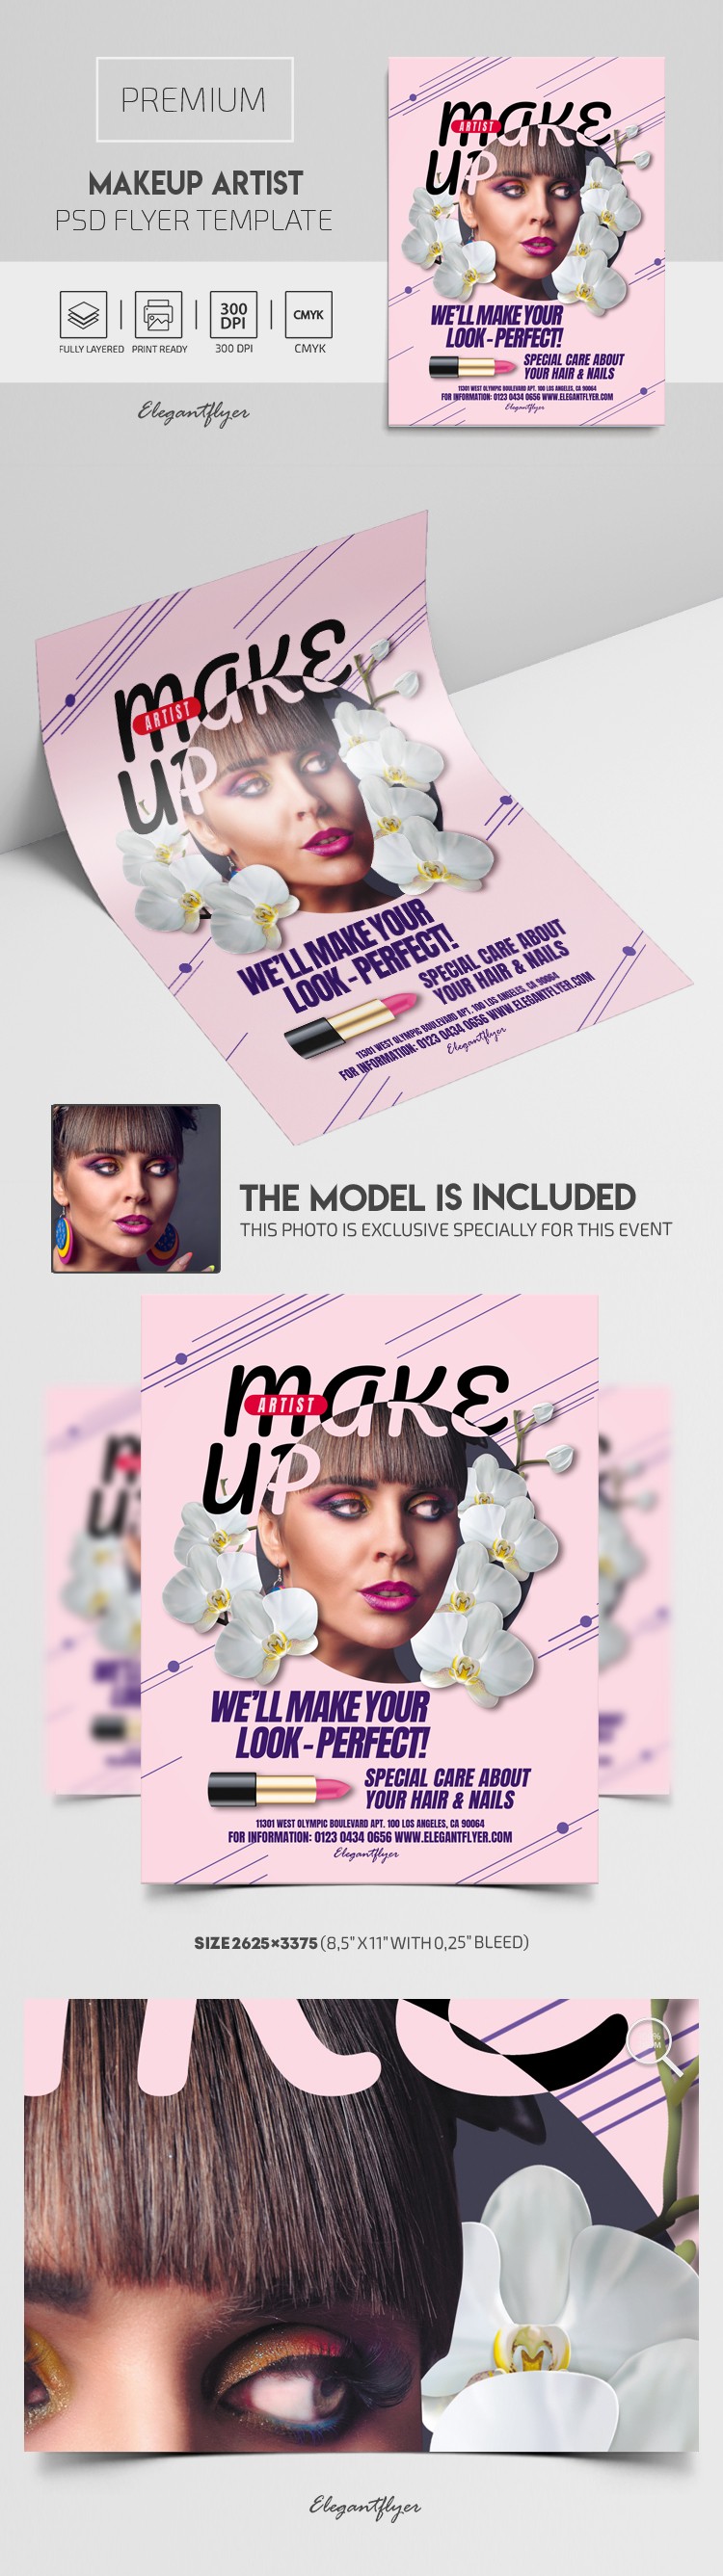 Make-Up Artist Flyer by ElegantFlyer